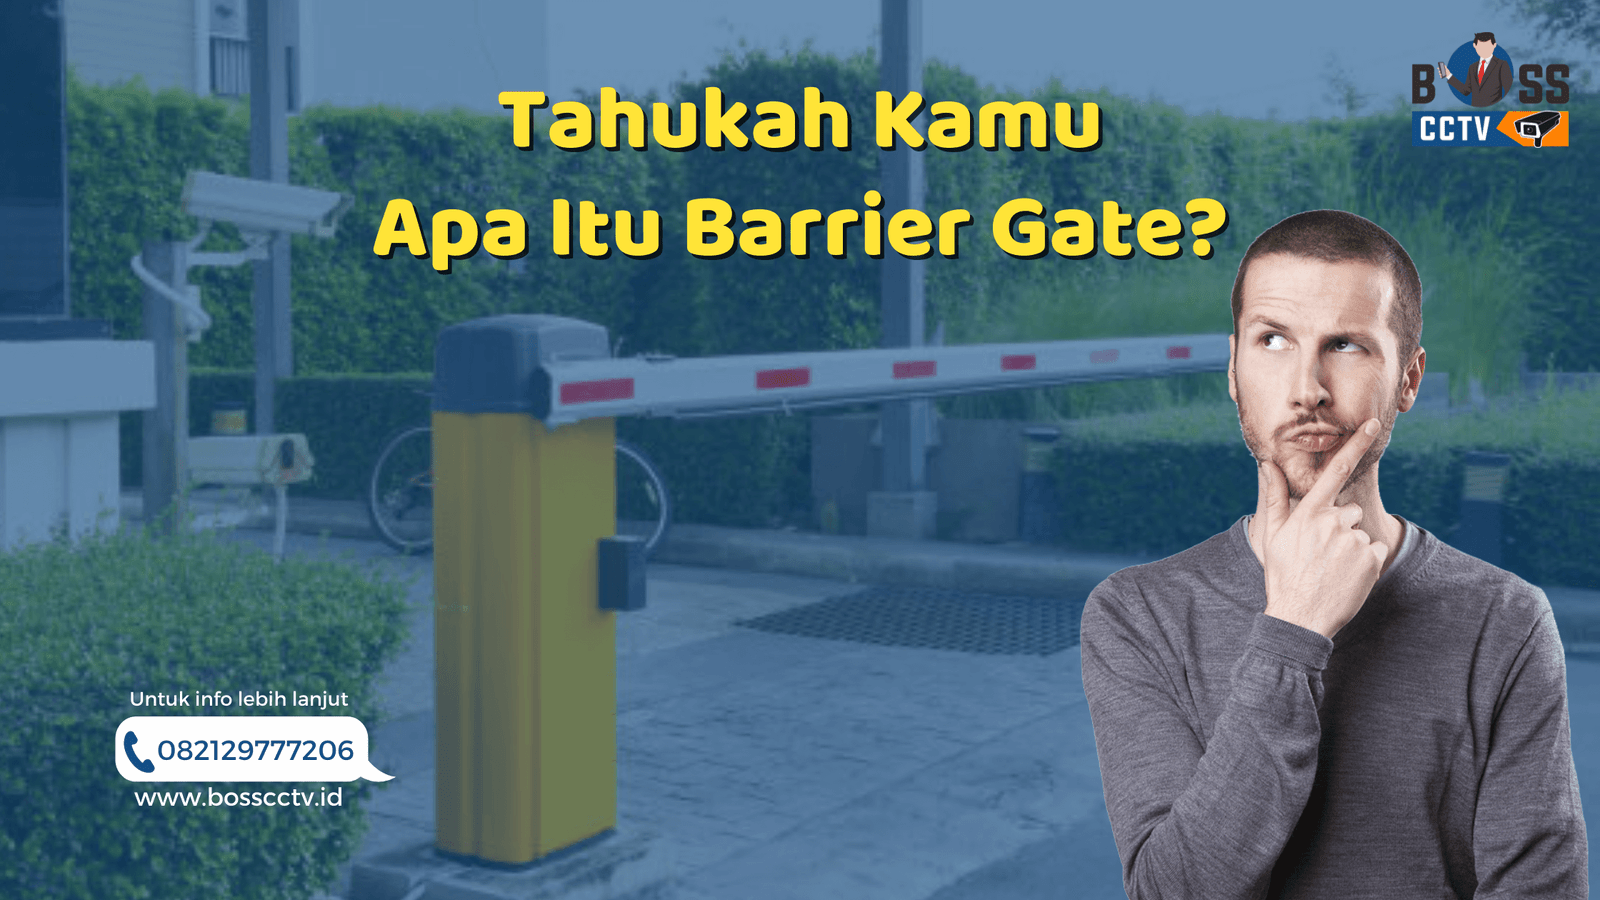 Tahukah kamu apa itu Barrier Gate